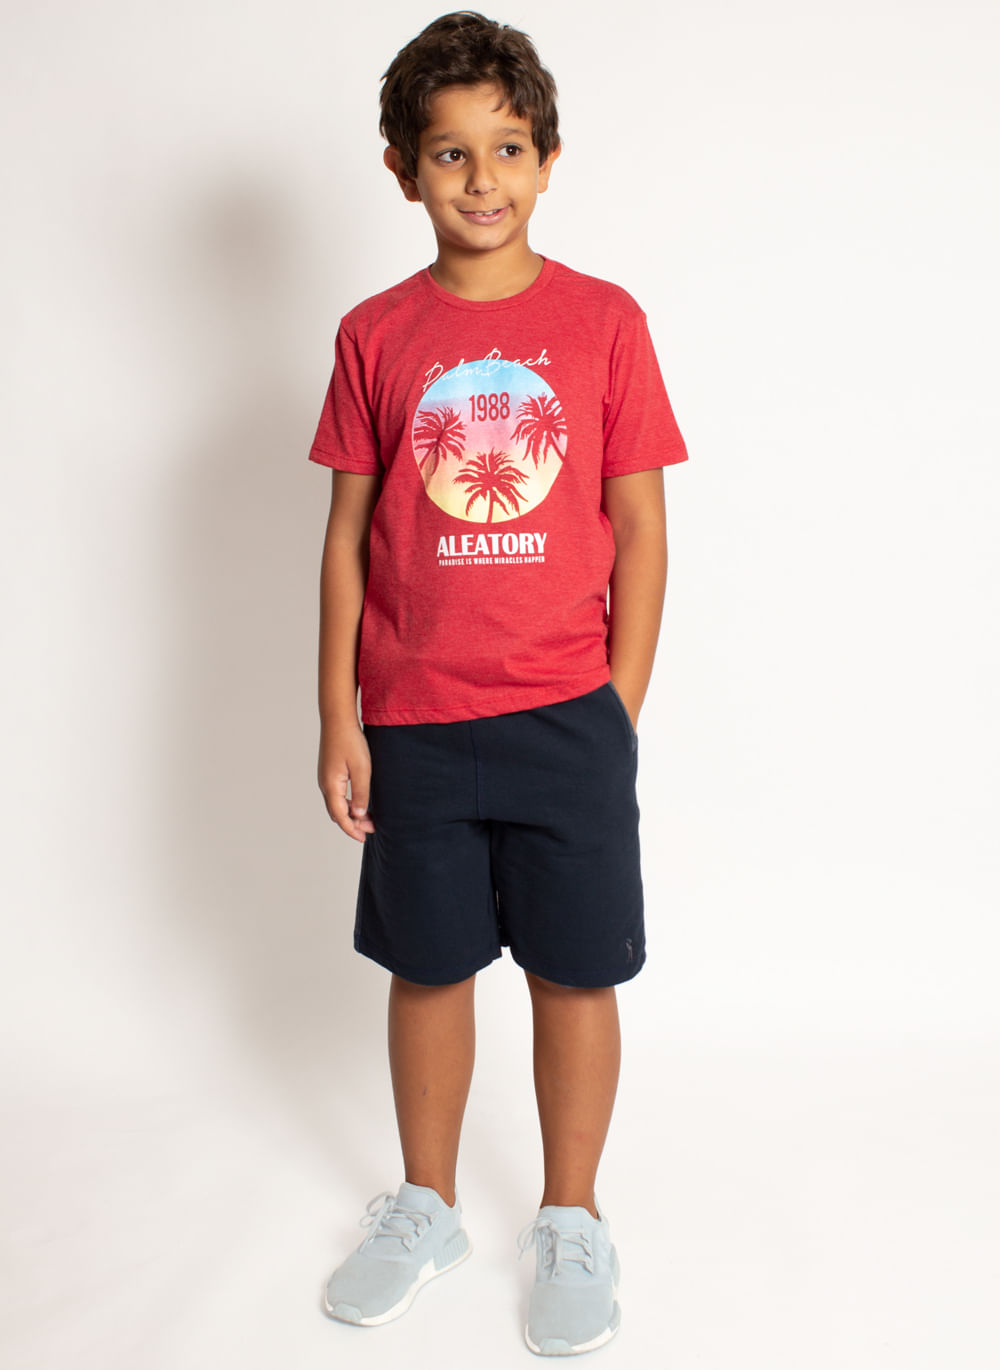 camiseta-aleatory-infantil-estampada-palm-beach-modelo-2020-5-